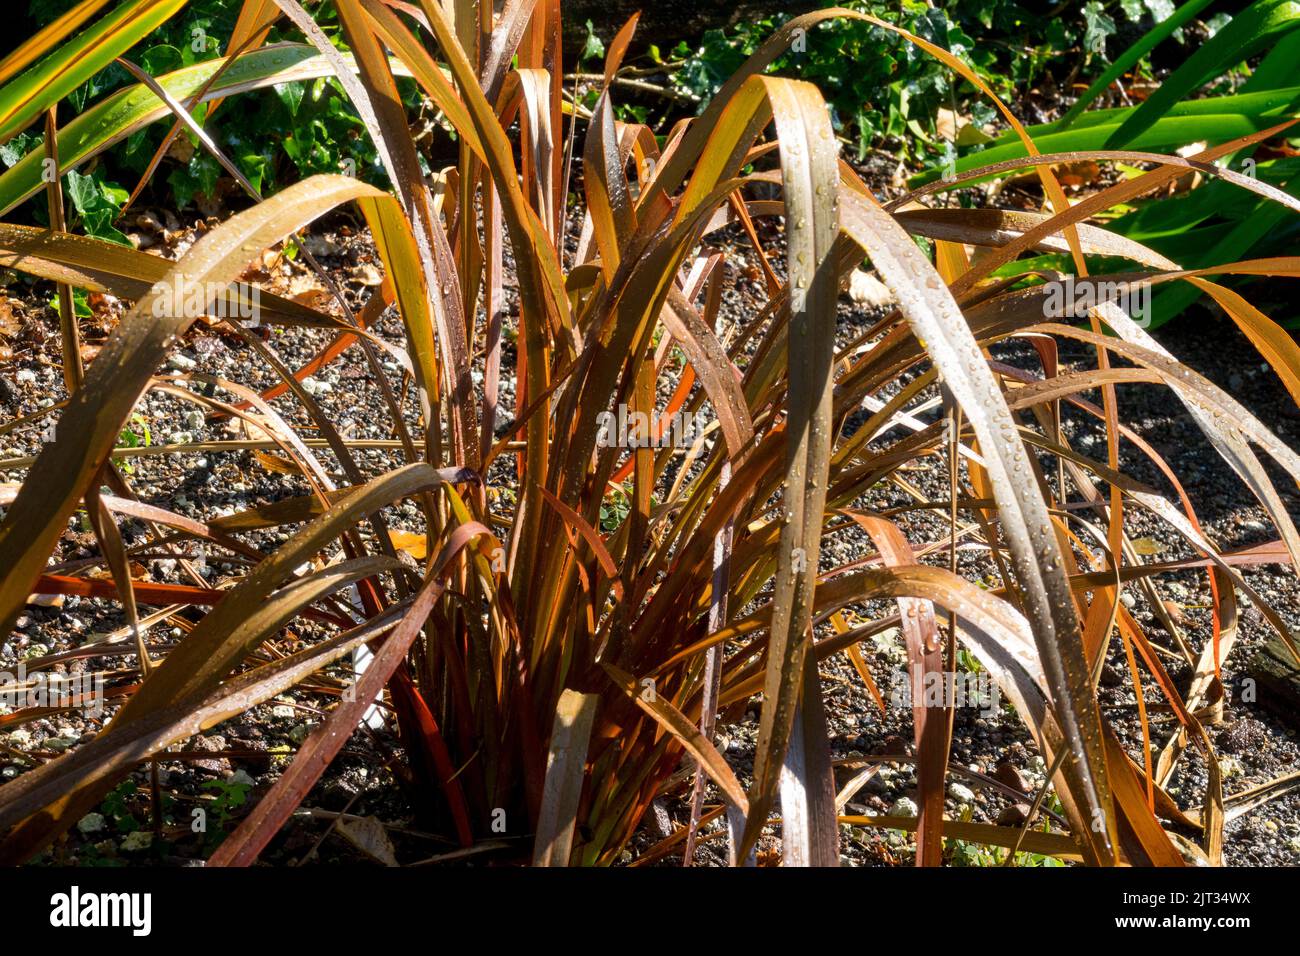 New Zealand Flax, Phormium tenax Purpureum Stock Photo